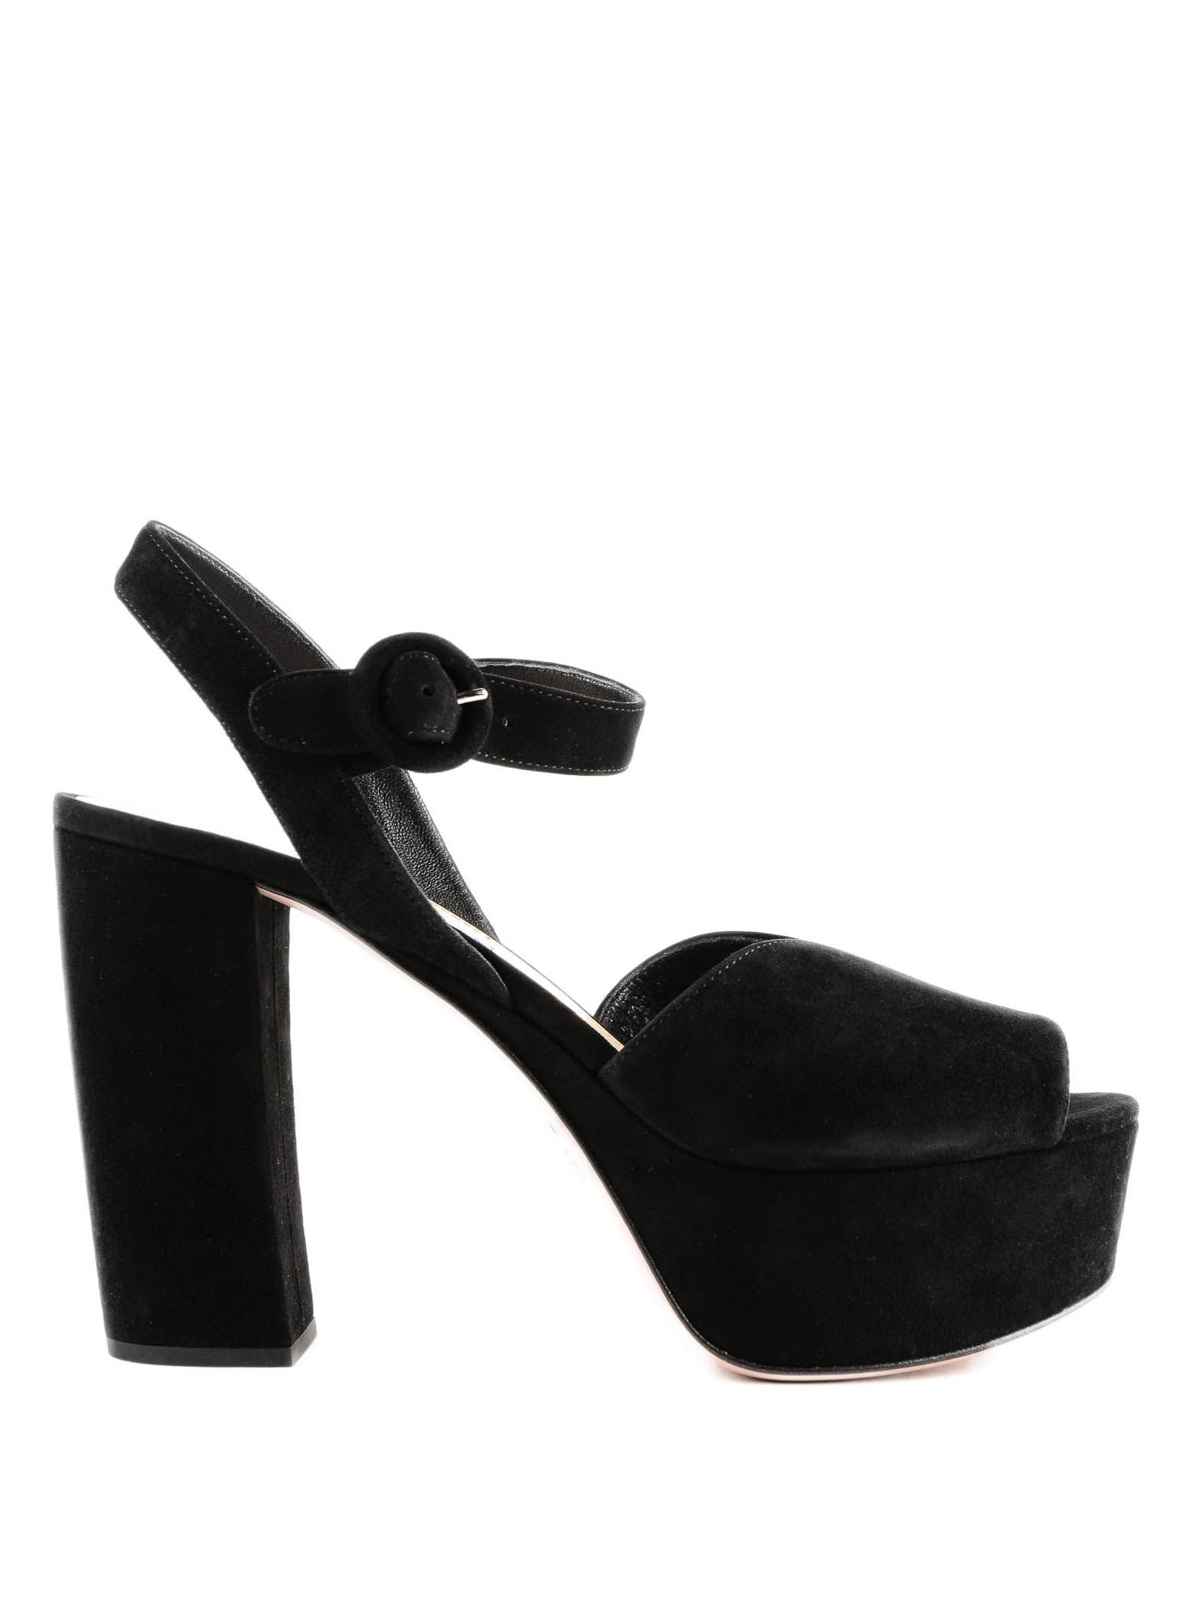 Sandals Prada - Black suede platform sandals - 1XP39A008F0002F105